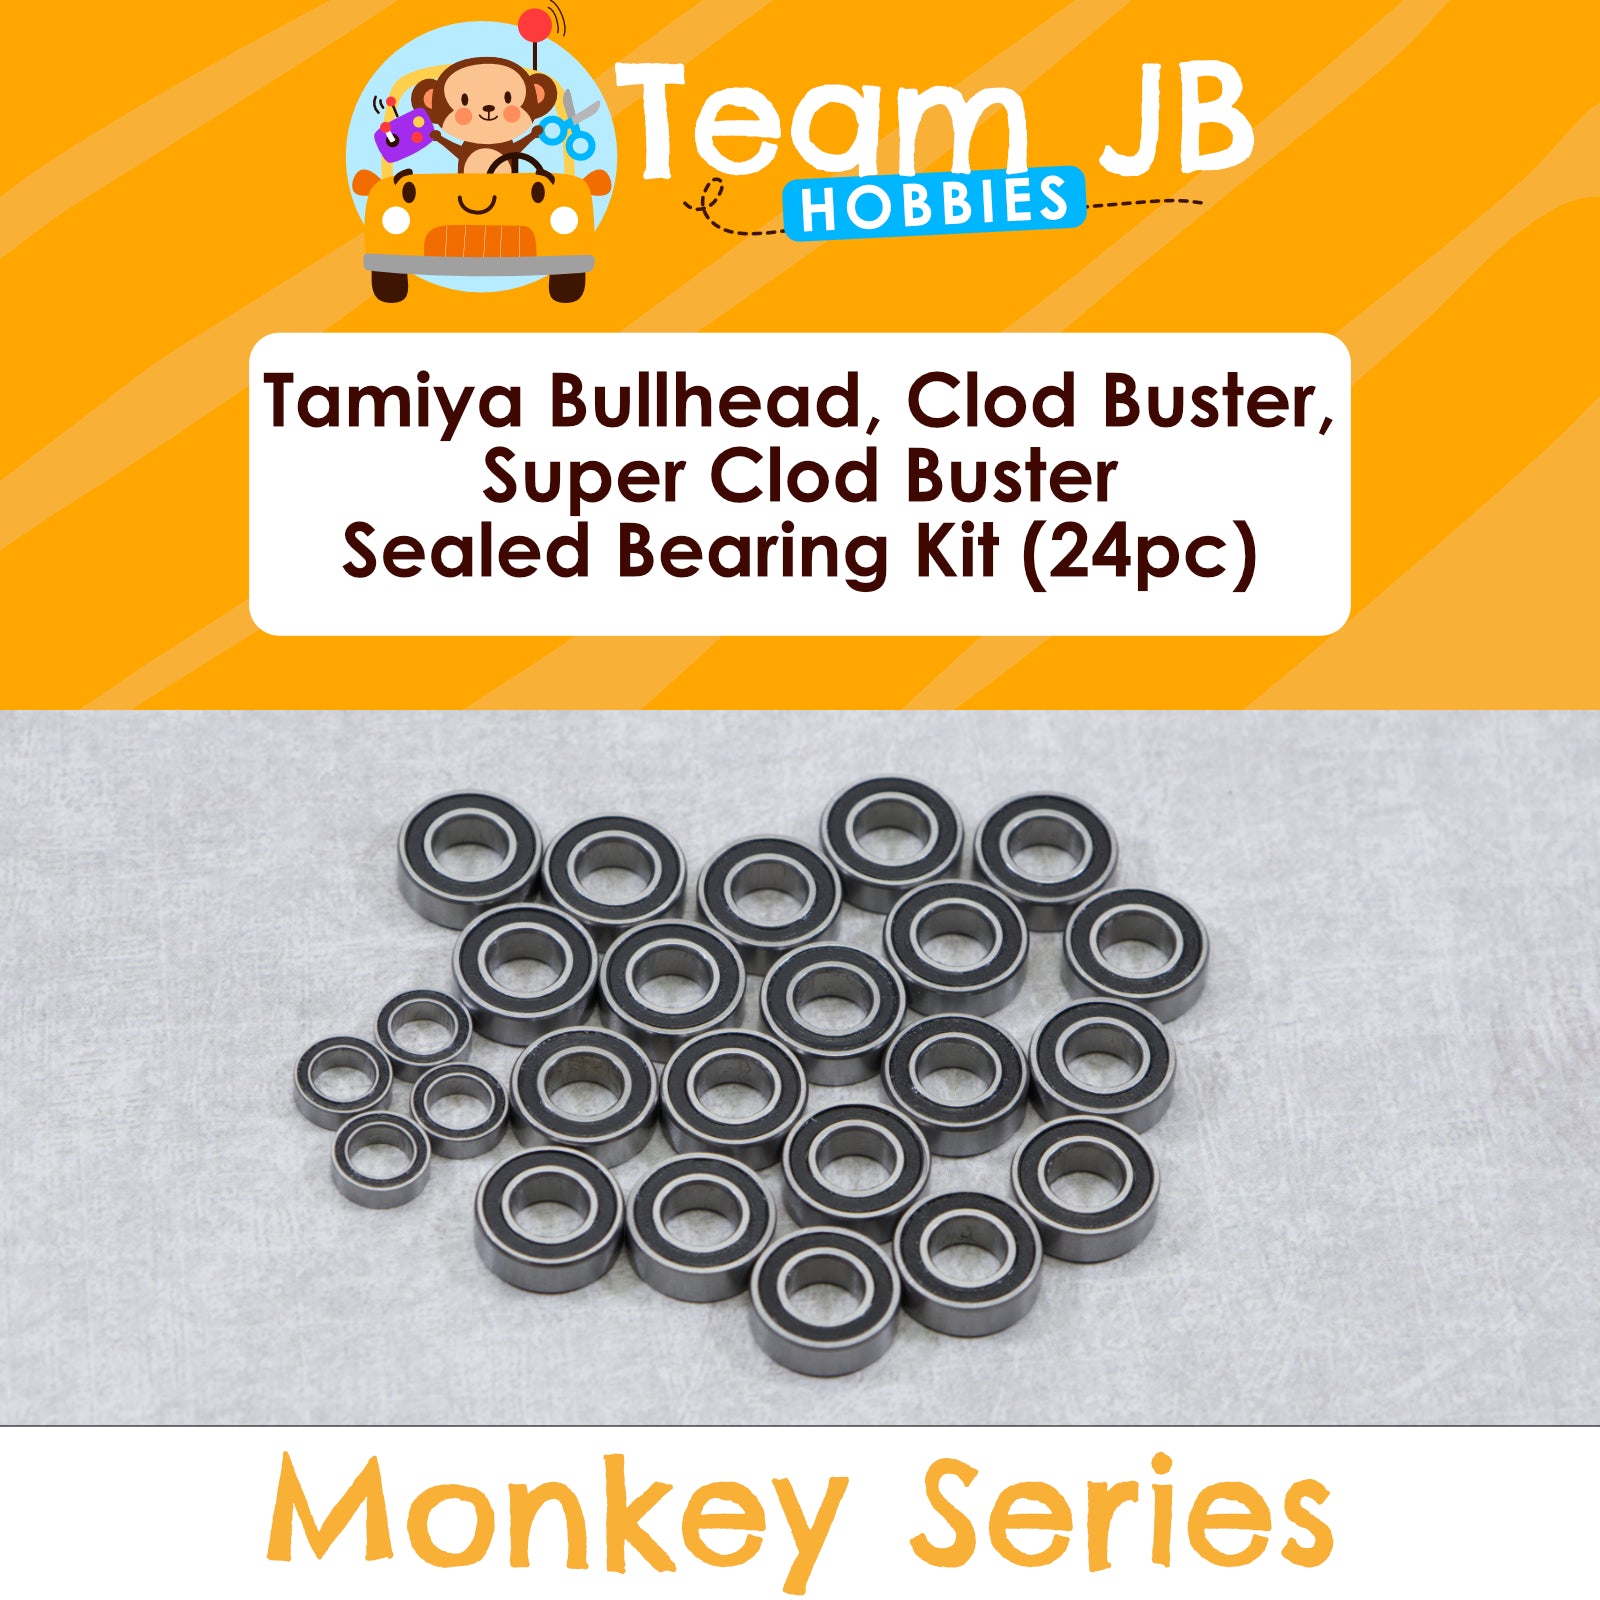 Tamiya Bullhead, Clod Buster, Super Clod Buster - Sealed Bearing Kit